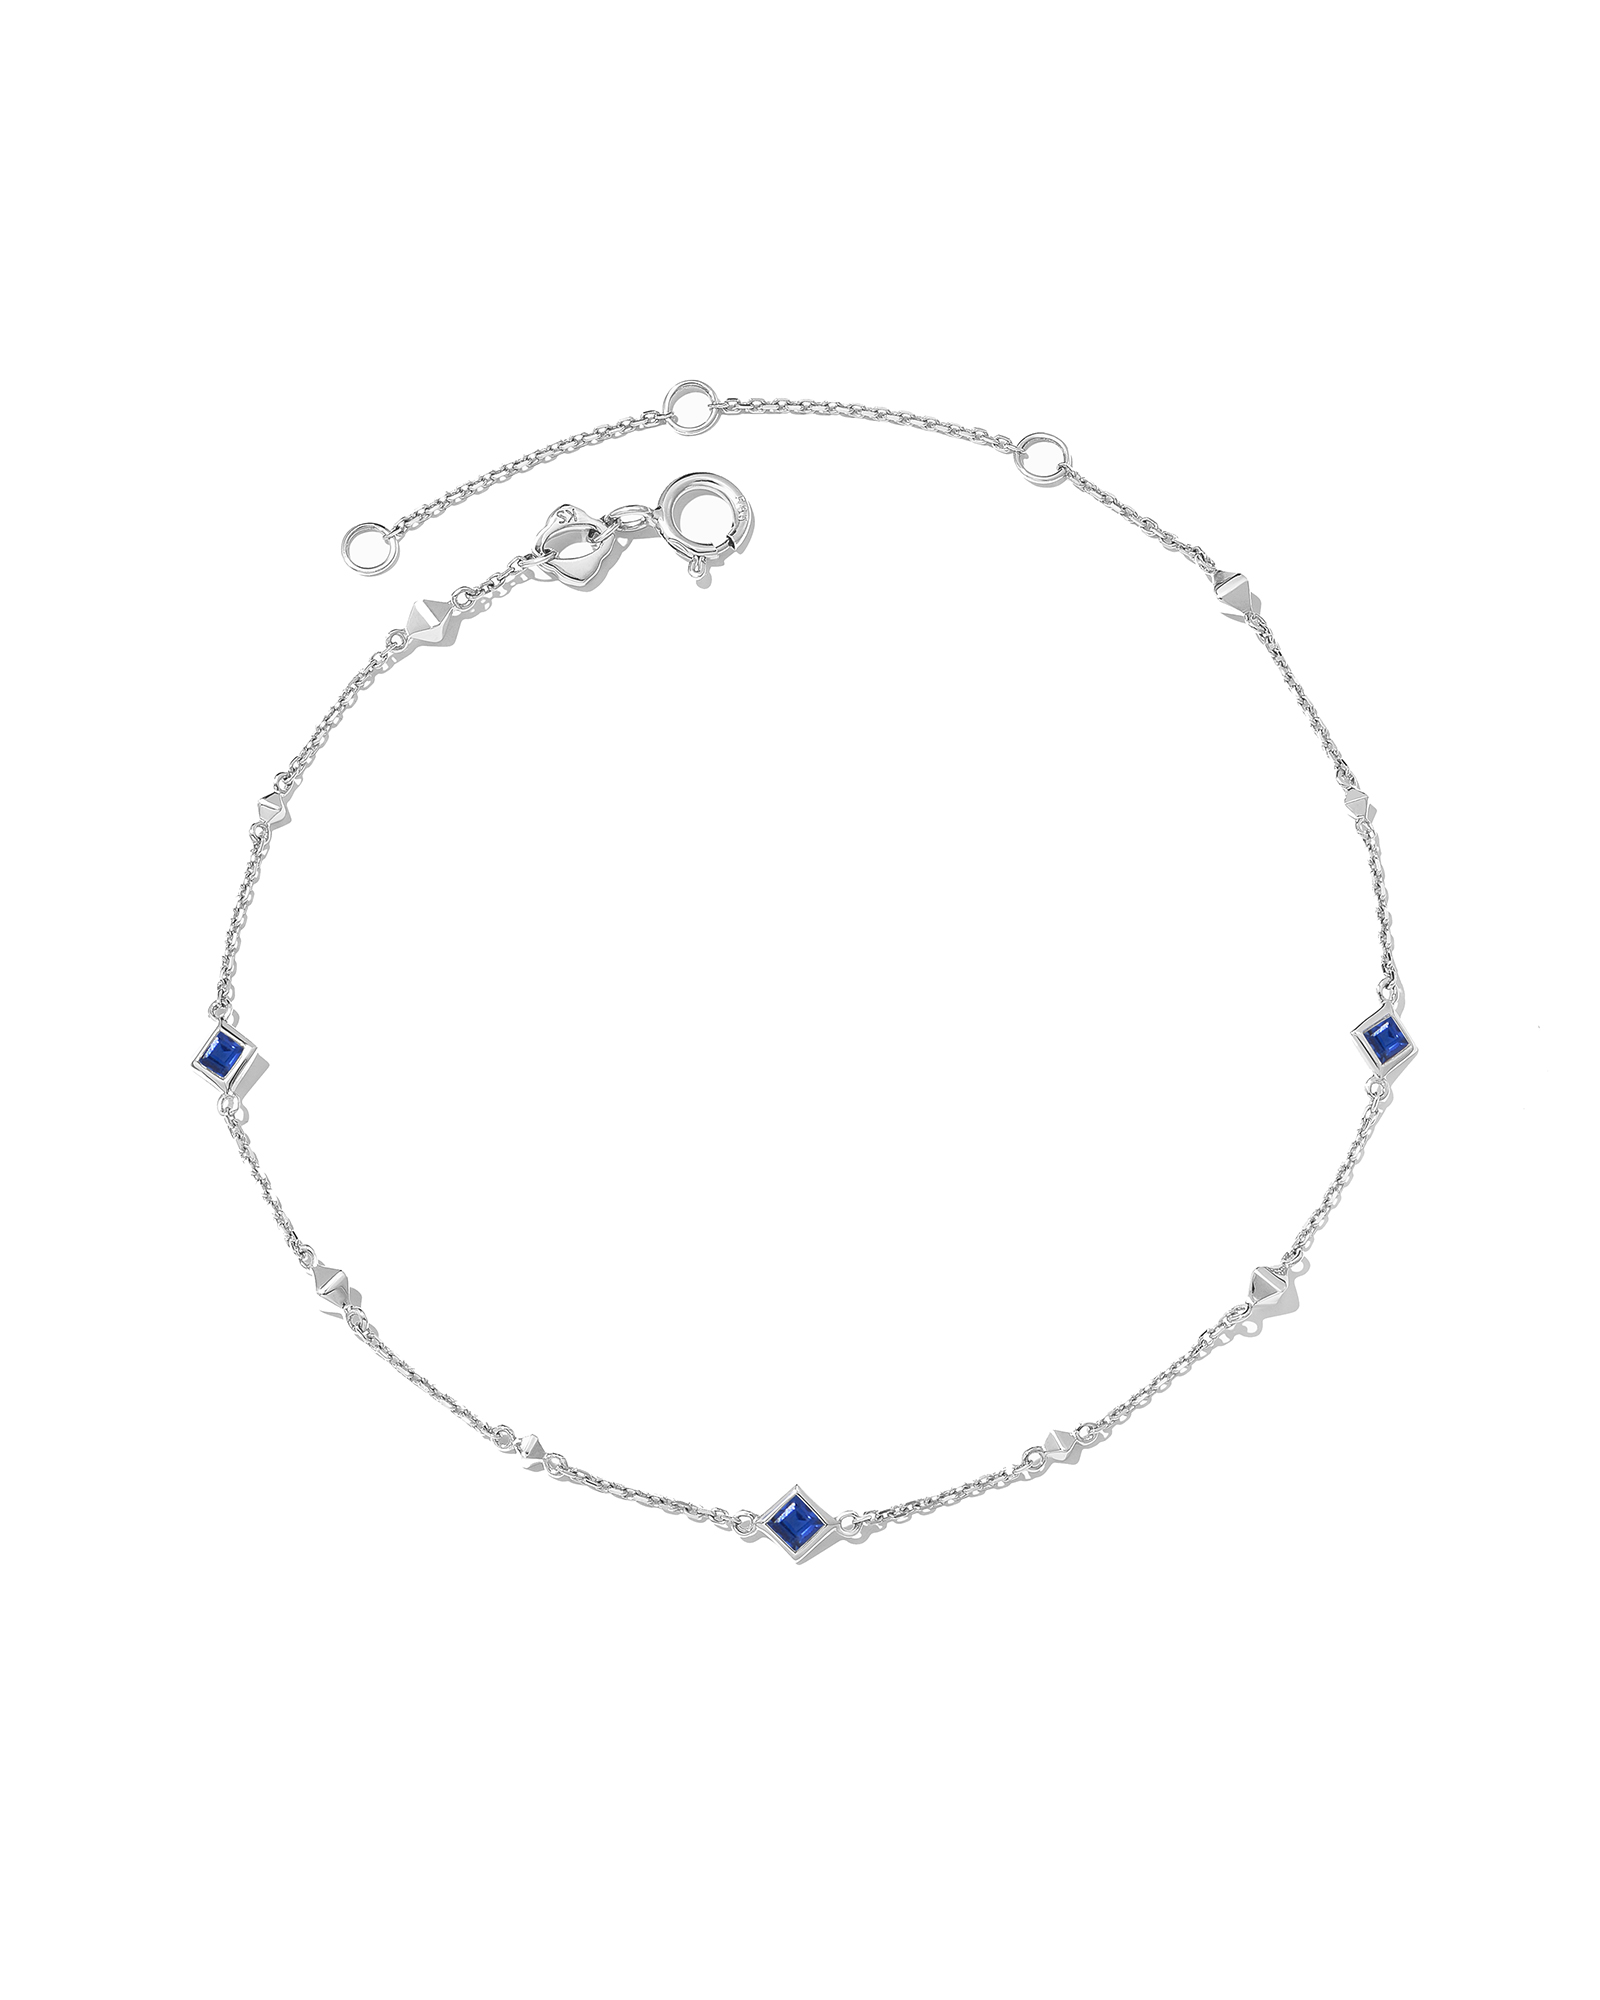 Janice Sterling Silver Bracelet with Blue Topazes- 7 Inches | Bluestone  Jewelry | Tahoe City, CA